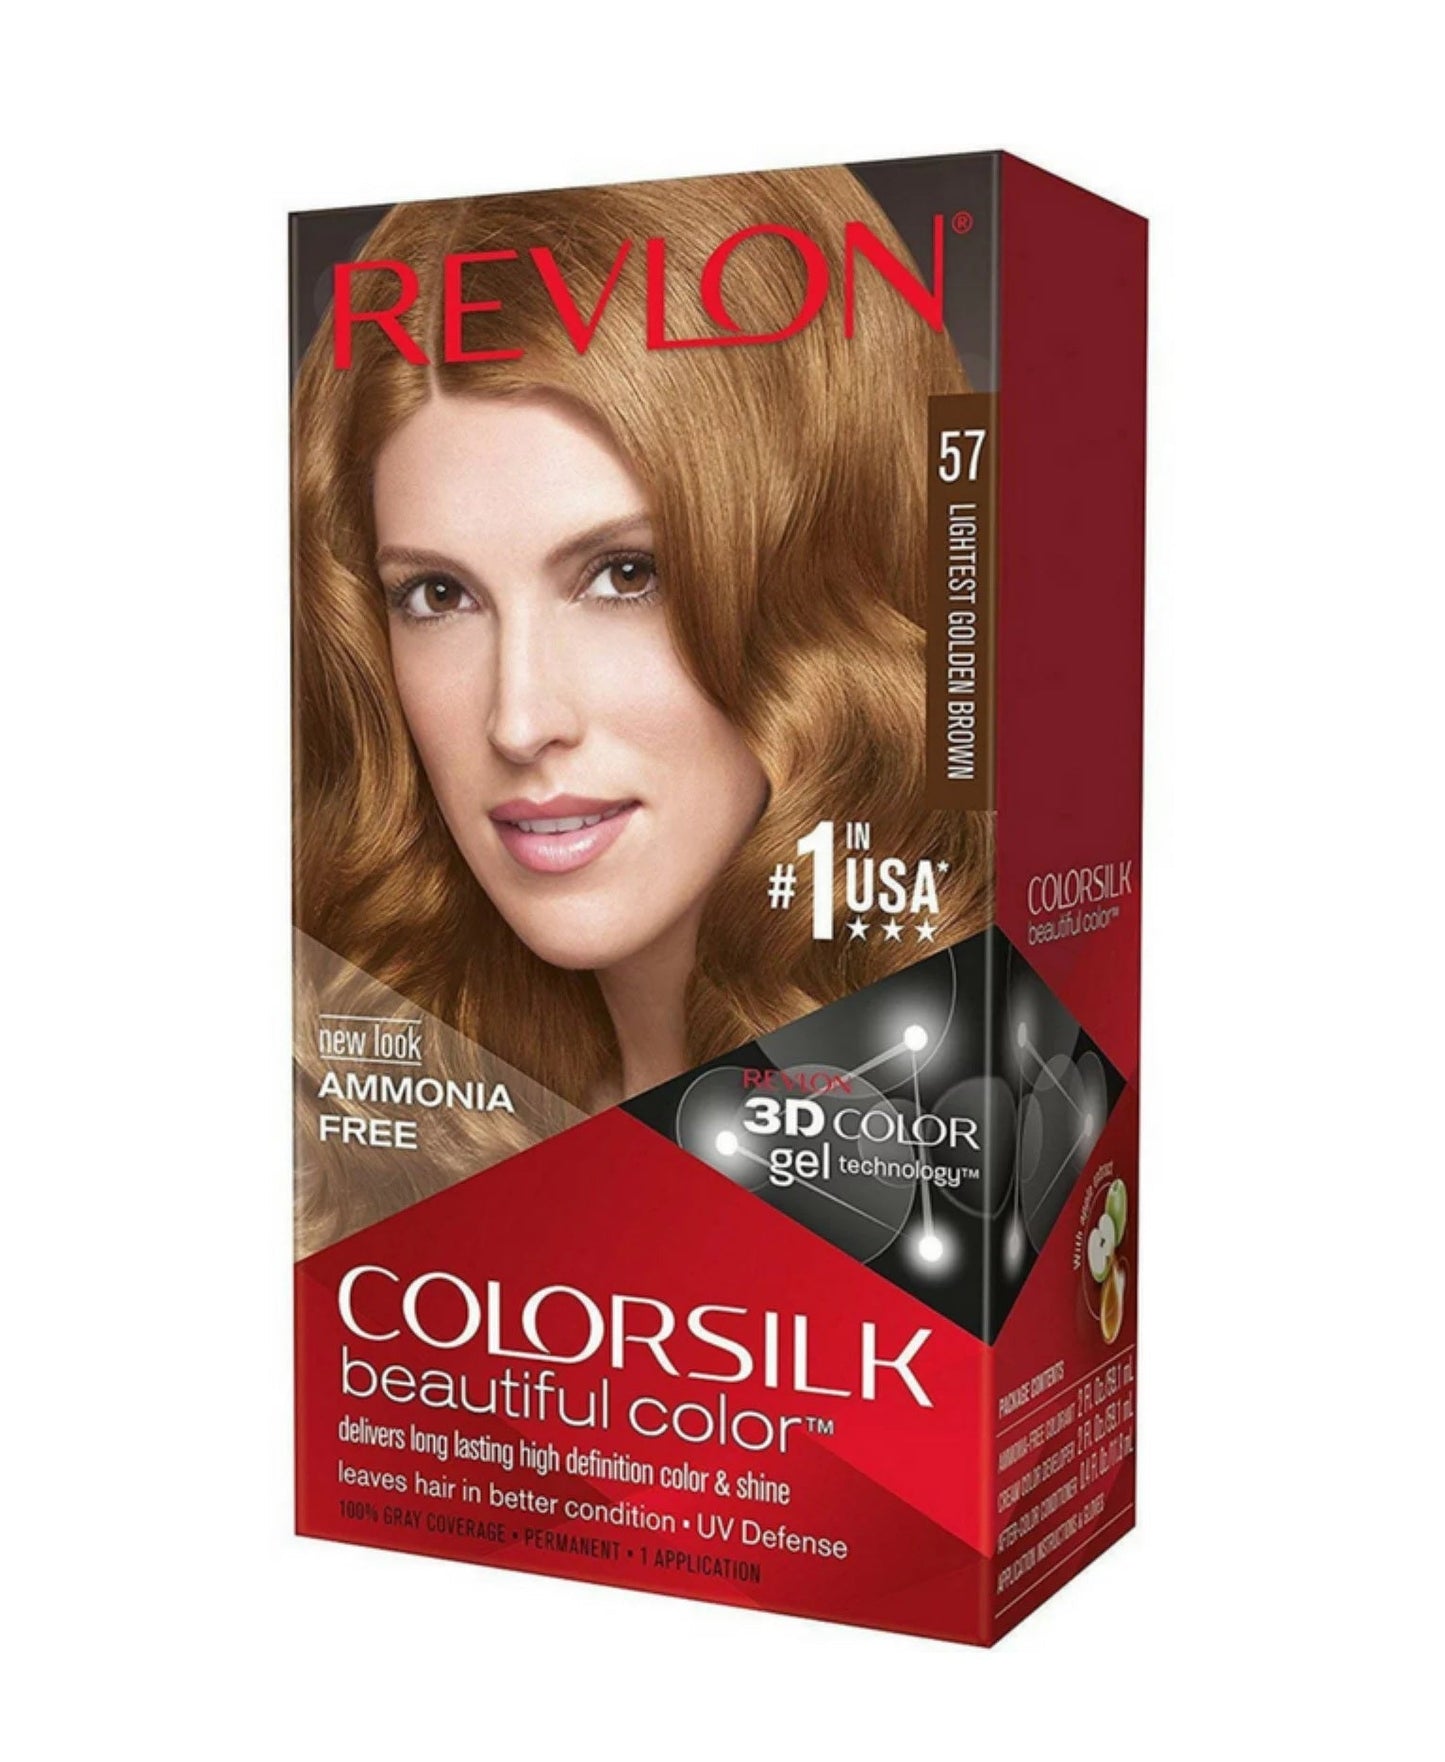 Revlon Colorsilk Hair Color 57 Lightest Golden Brown USA - 1ct/3PK